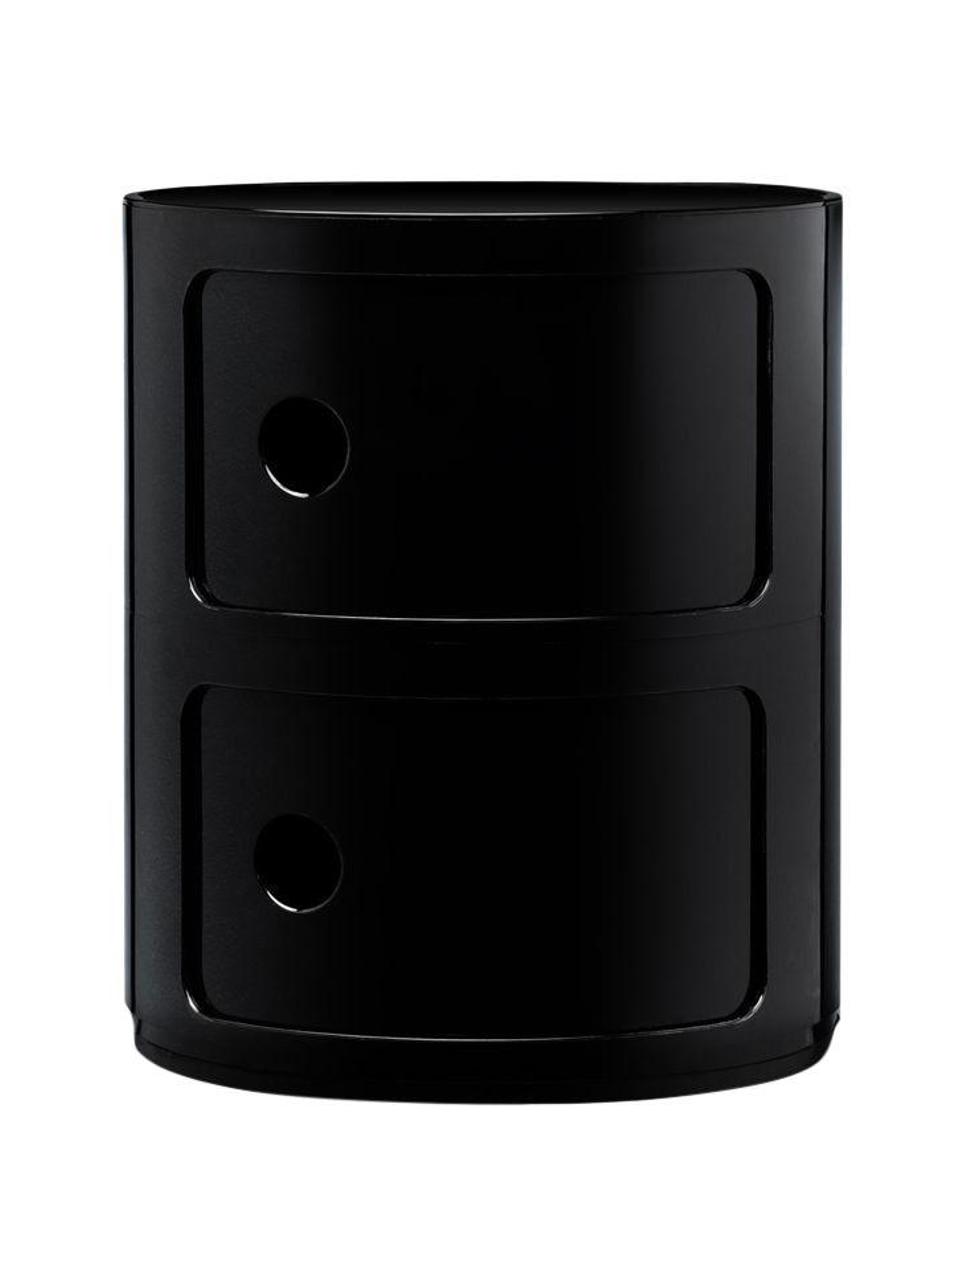 Design container Componibili 2 modules in zwart, Kunststof (ABS), gelakt, Greenguard gecertificeerd, Glanzend zwart, Ø 32 x H 40 cm